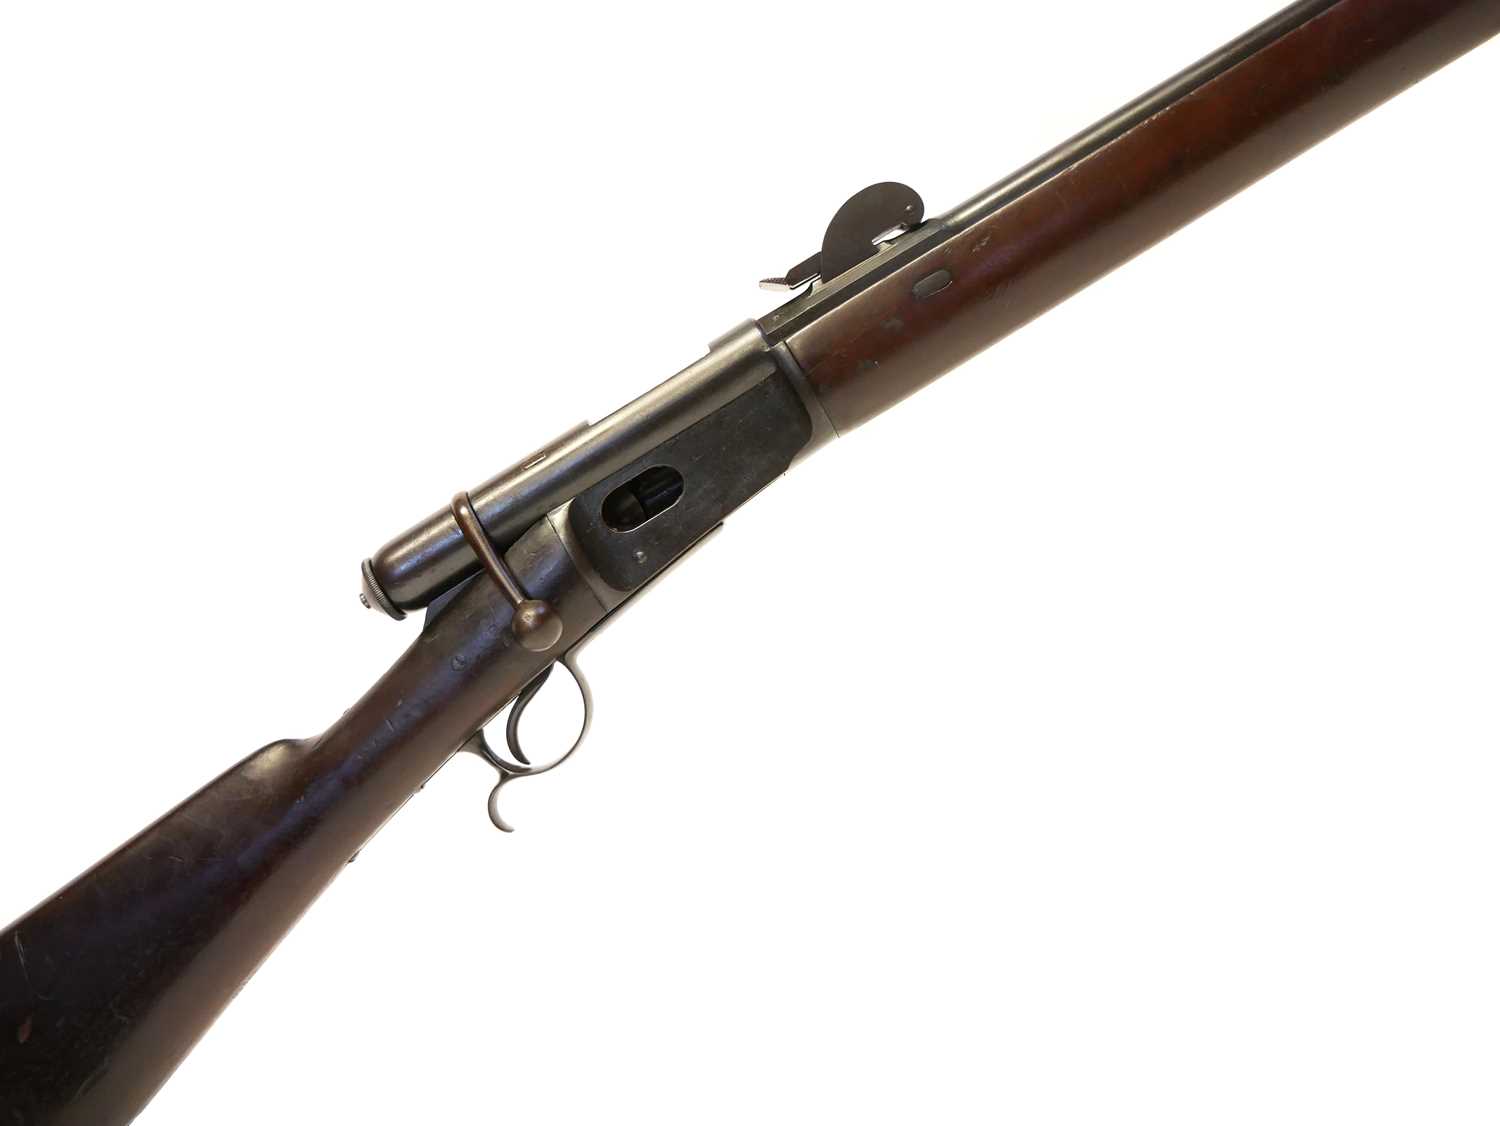 Swiss Vetterli M1878 / 81 10.4x38 rimfire bolt action rifle, serial number 159076, 32inch barrel